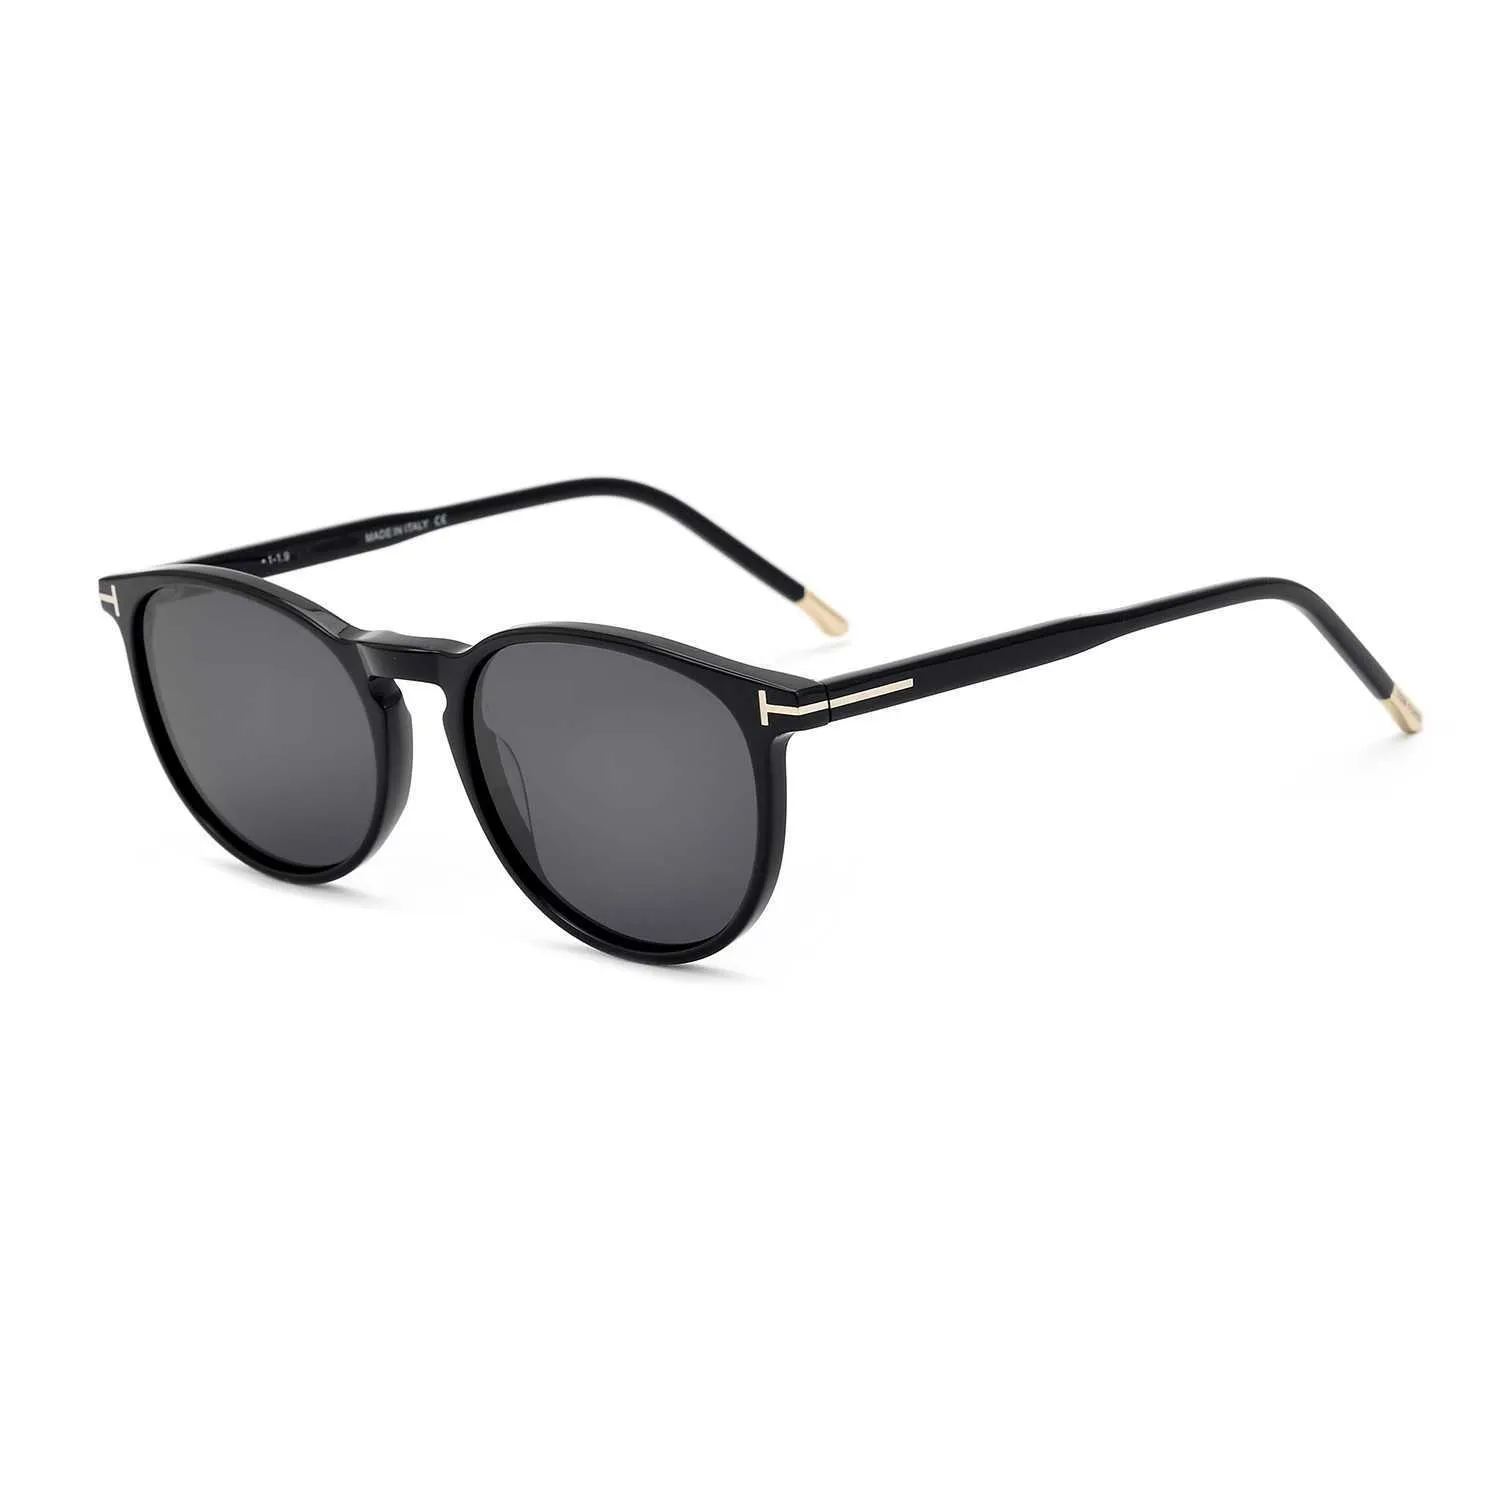 Luksusowe okulary przeciwsłoneczne projektant Tom Letter Women Mens Goggle Ford Series Men's and Women's Count Frame Board Outdoor Sunglasses